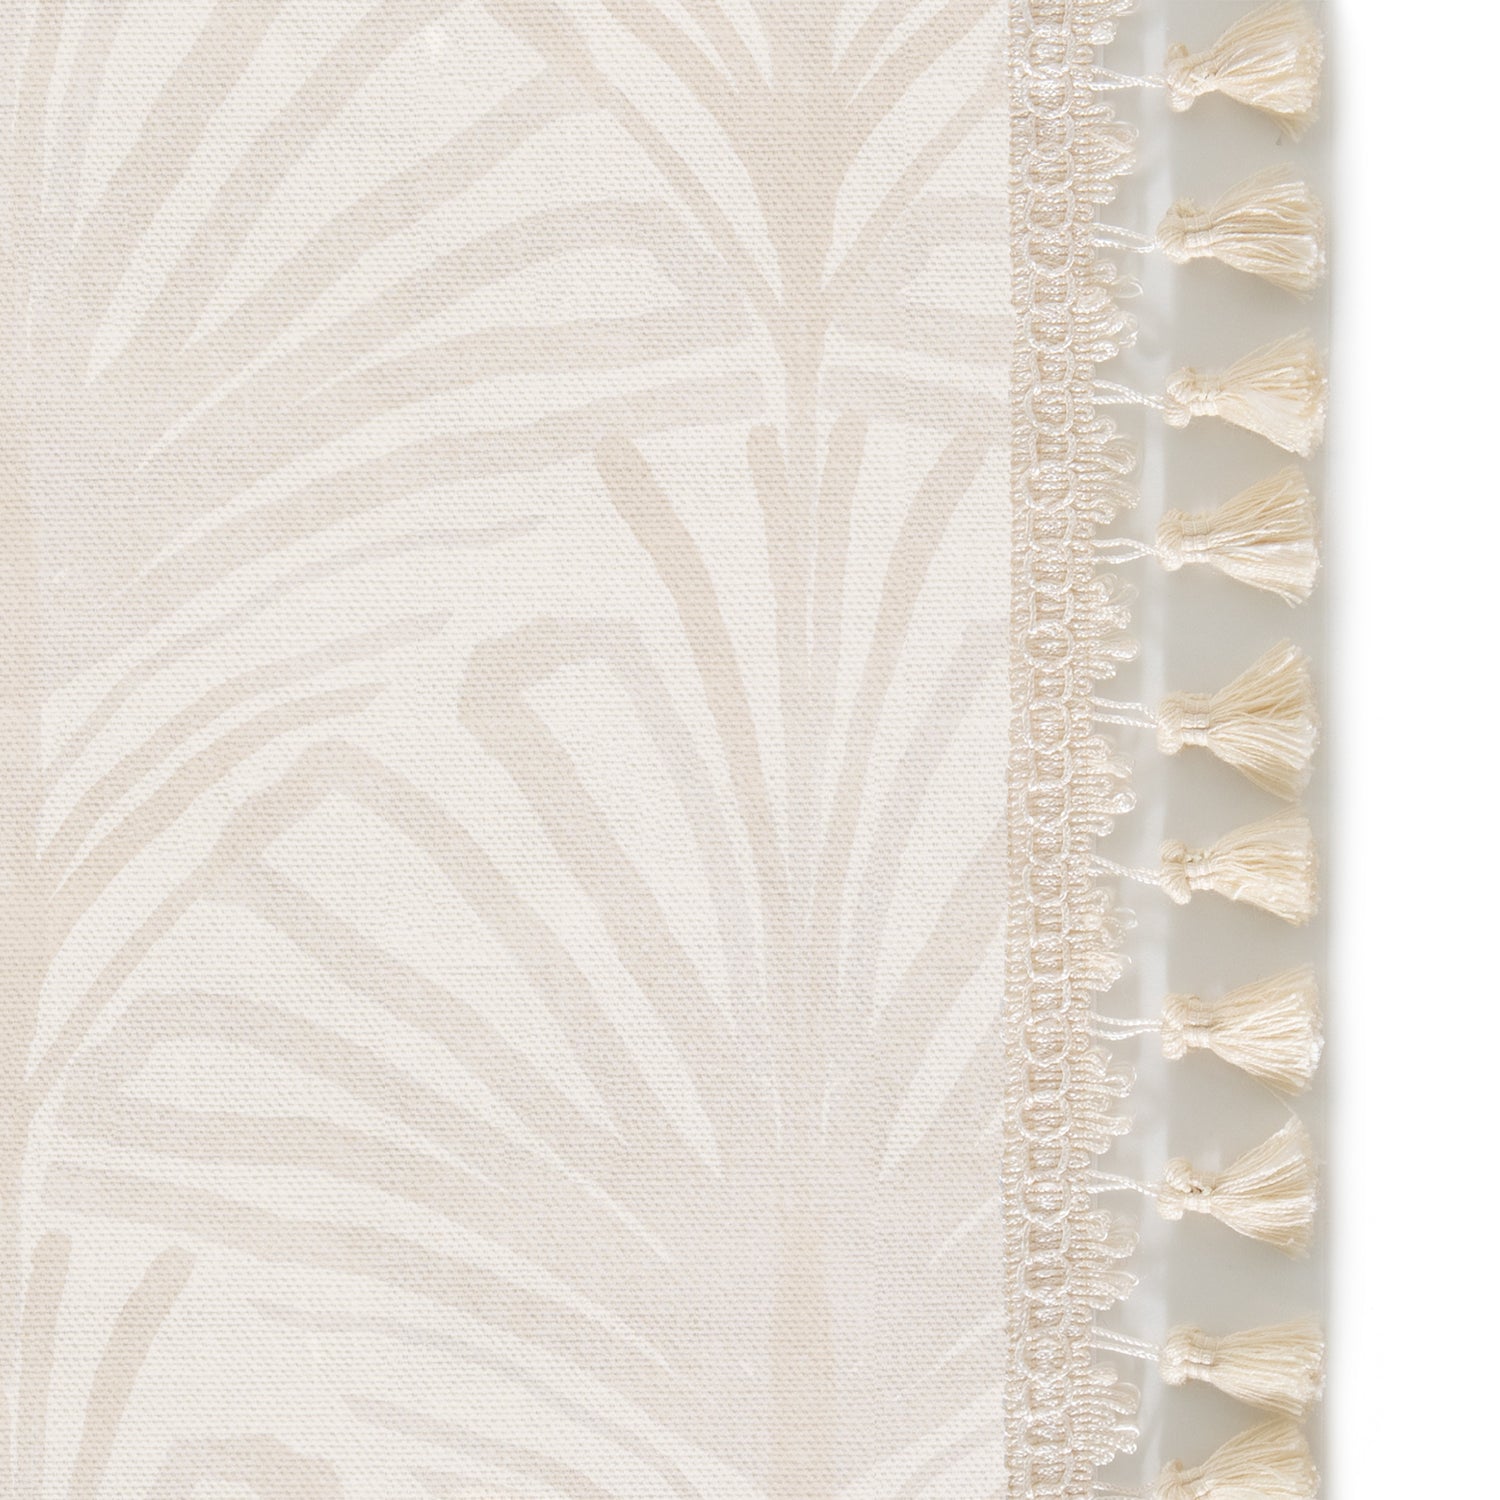 Upclose picture of Suzy Sand custom shower curtain with cream tassel trim